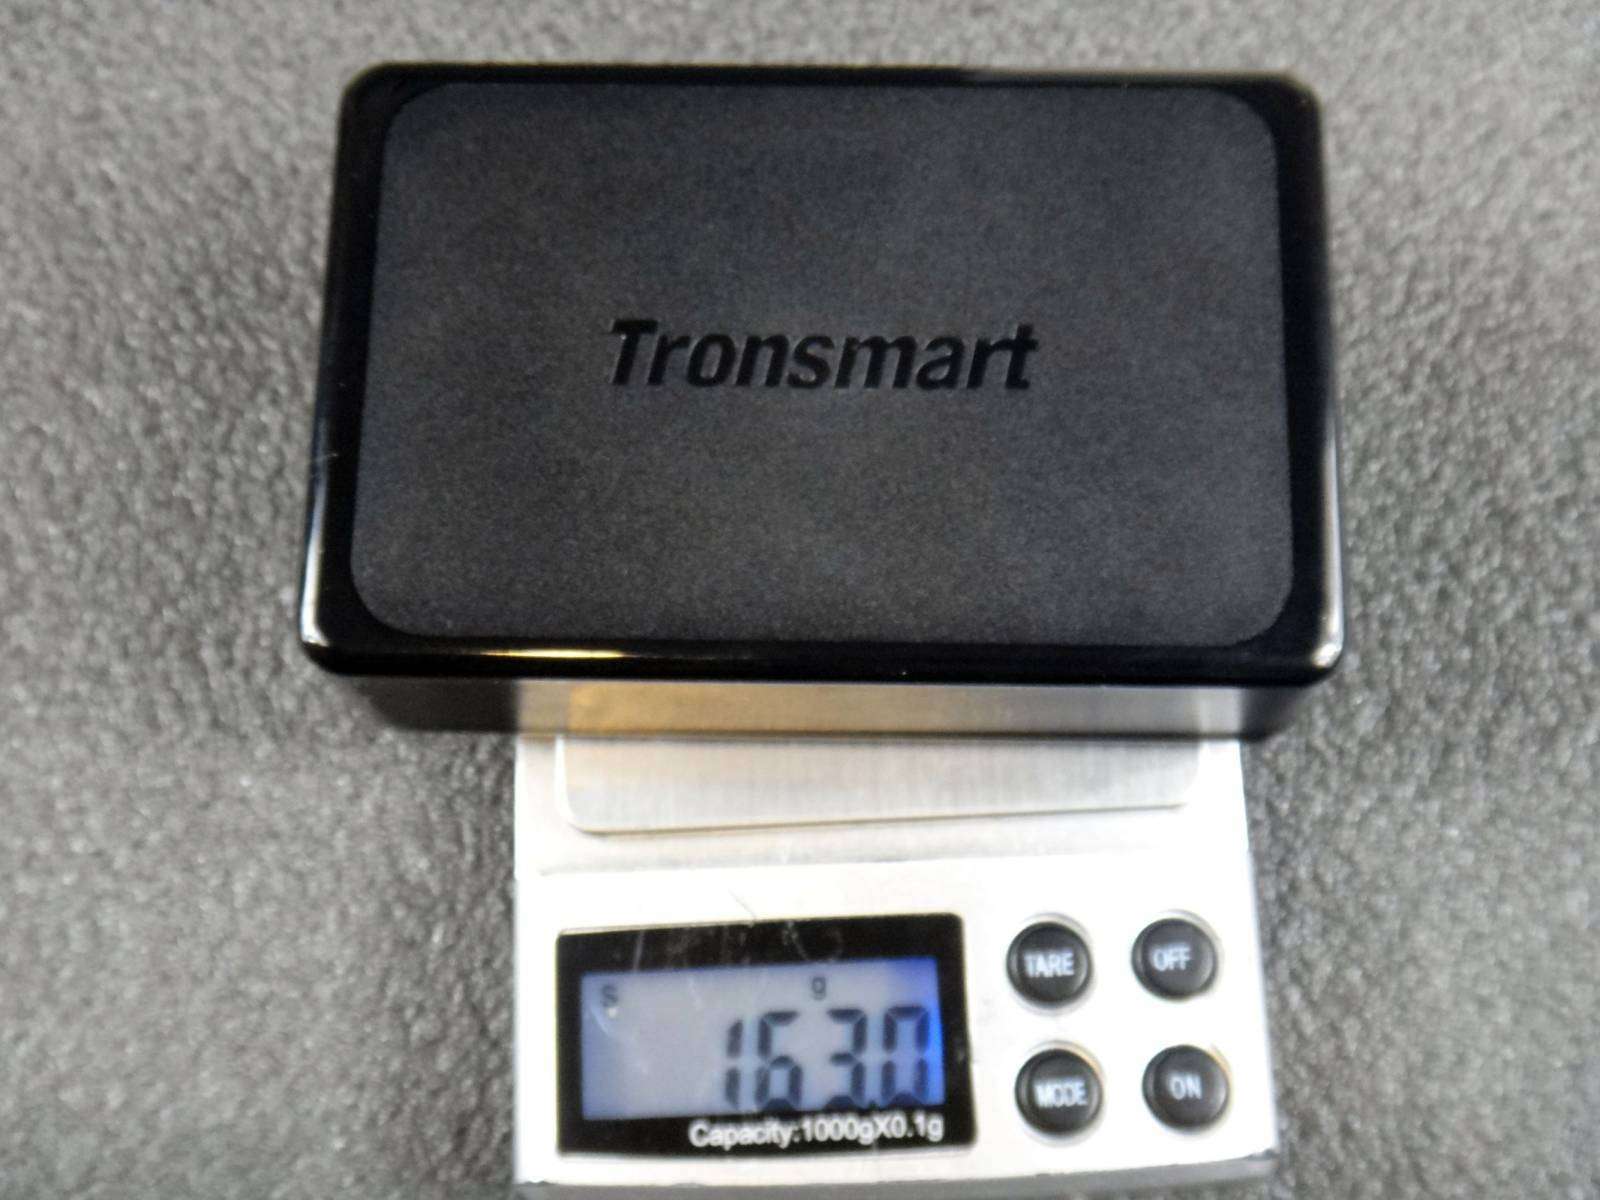 Aliexpress: Tronsmart U5PTA зарядное устройство на 5 портов с Quick Charge 3.0